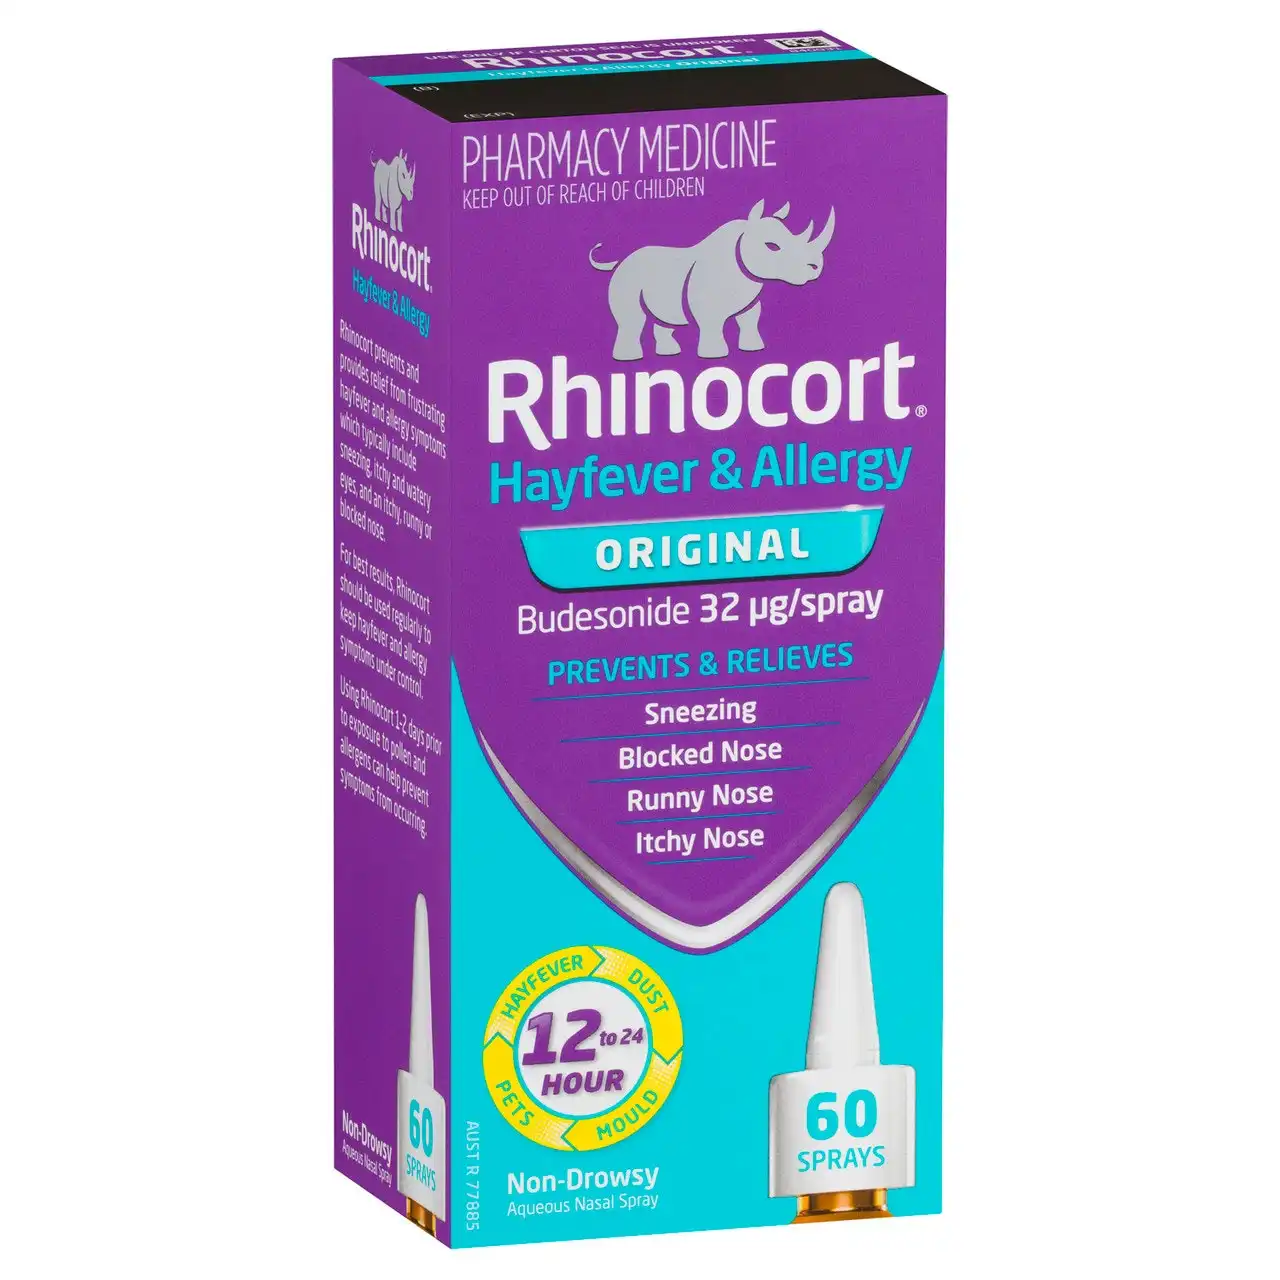 Rhinocort Original Non-Drowsy Hayfever & Allergy Relief Nasal Spray 60 Sprays